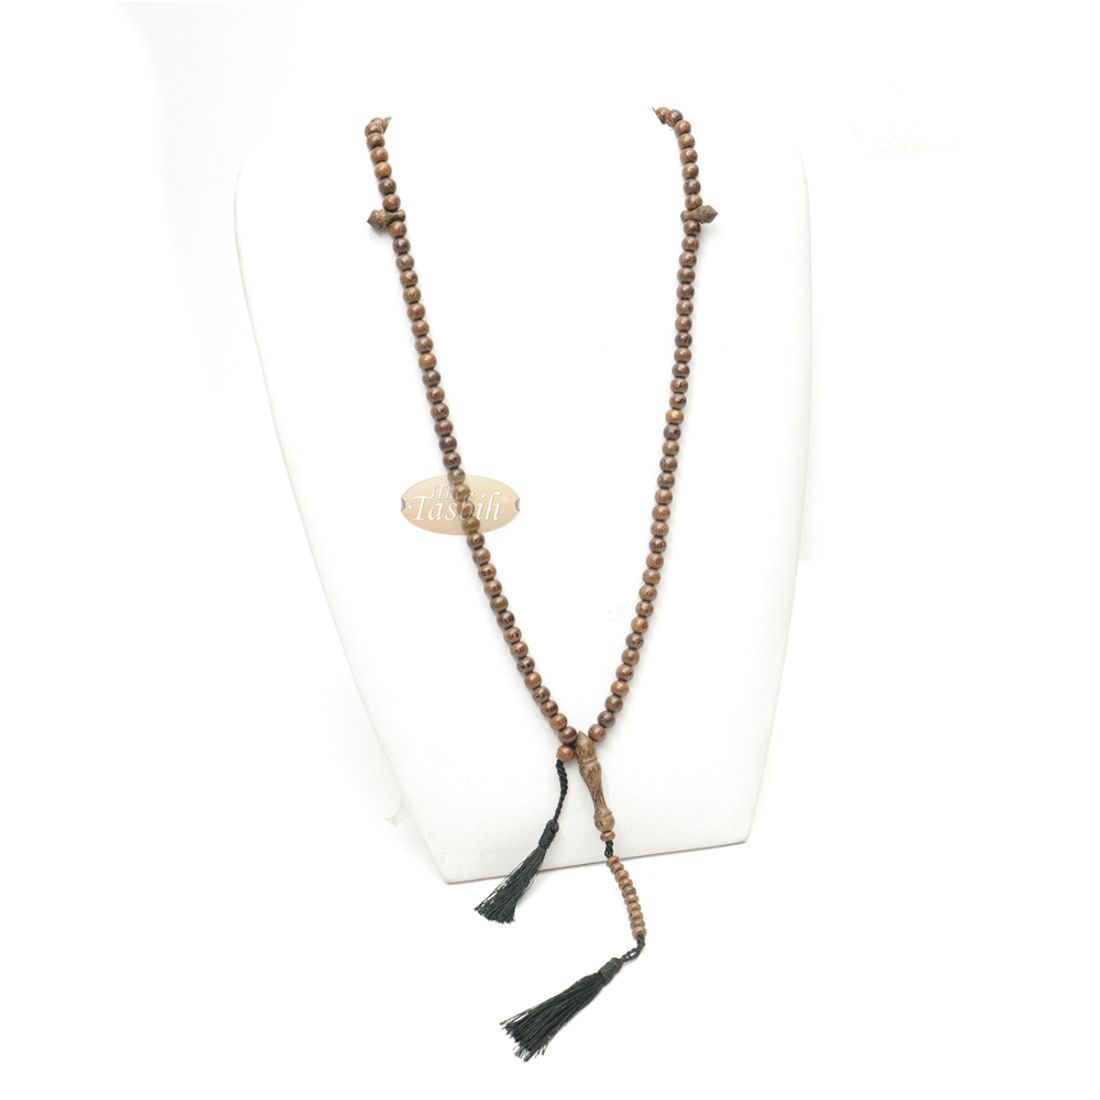 Wooden Islamic Prayer Beads – Natural Johar Tasbih 99 ct Round 8mm Beads with Black Tassels